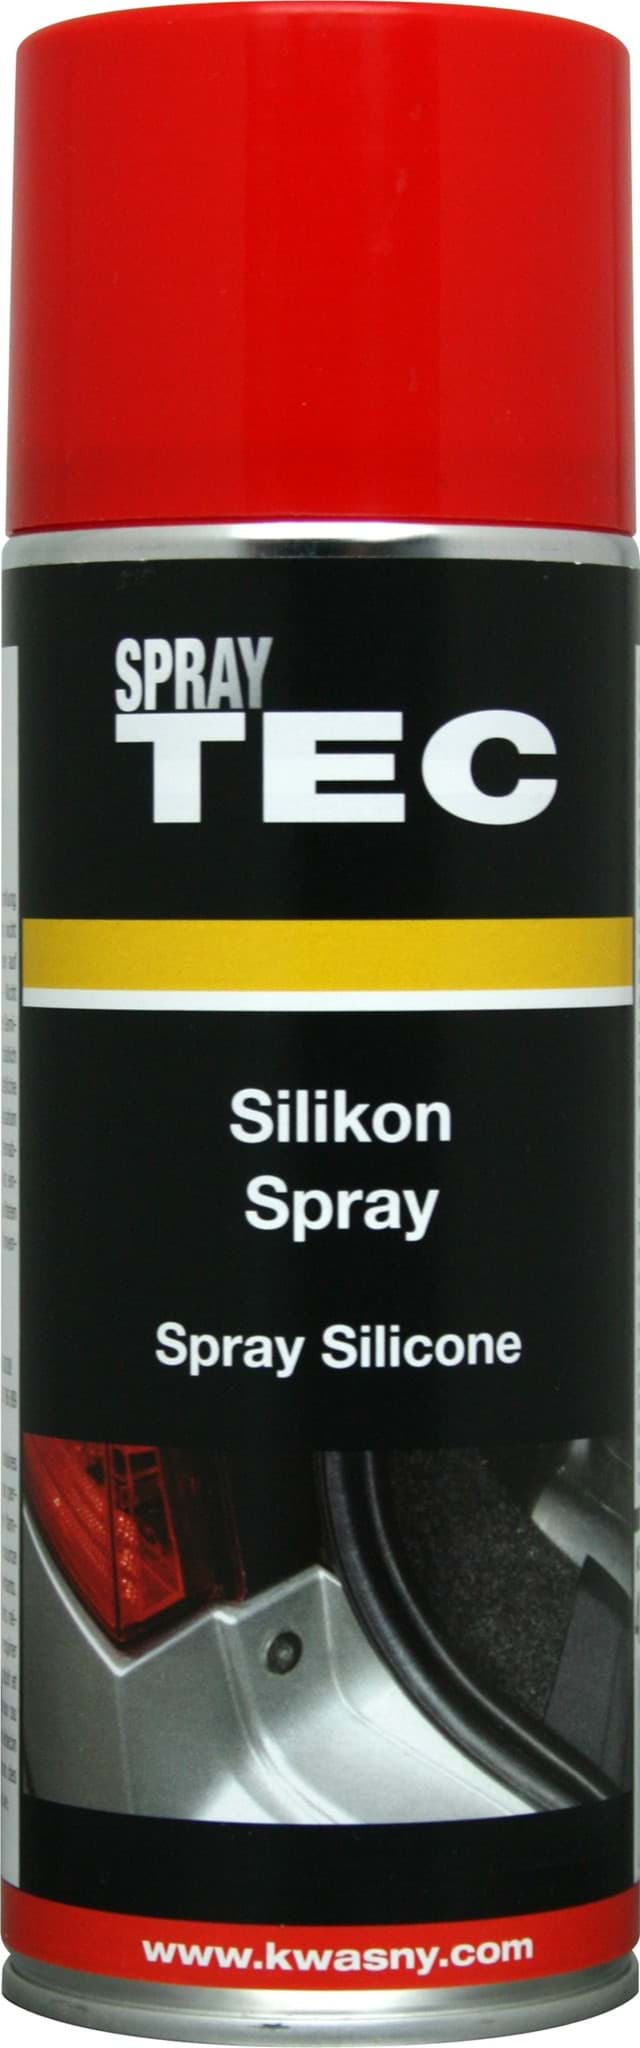 Bild von Silikon-Spray 400ml SprayTEC 235001